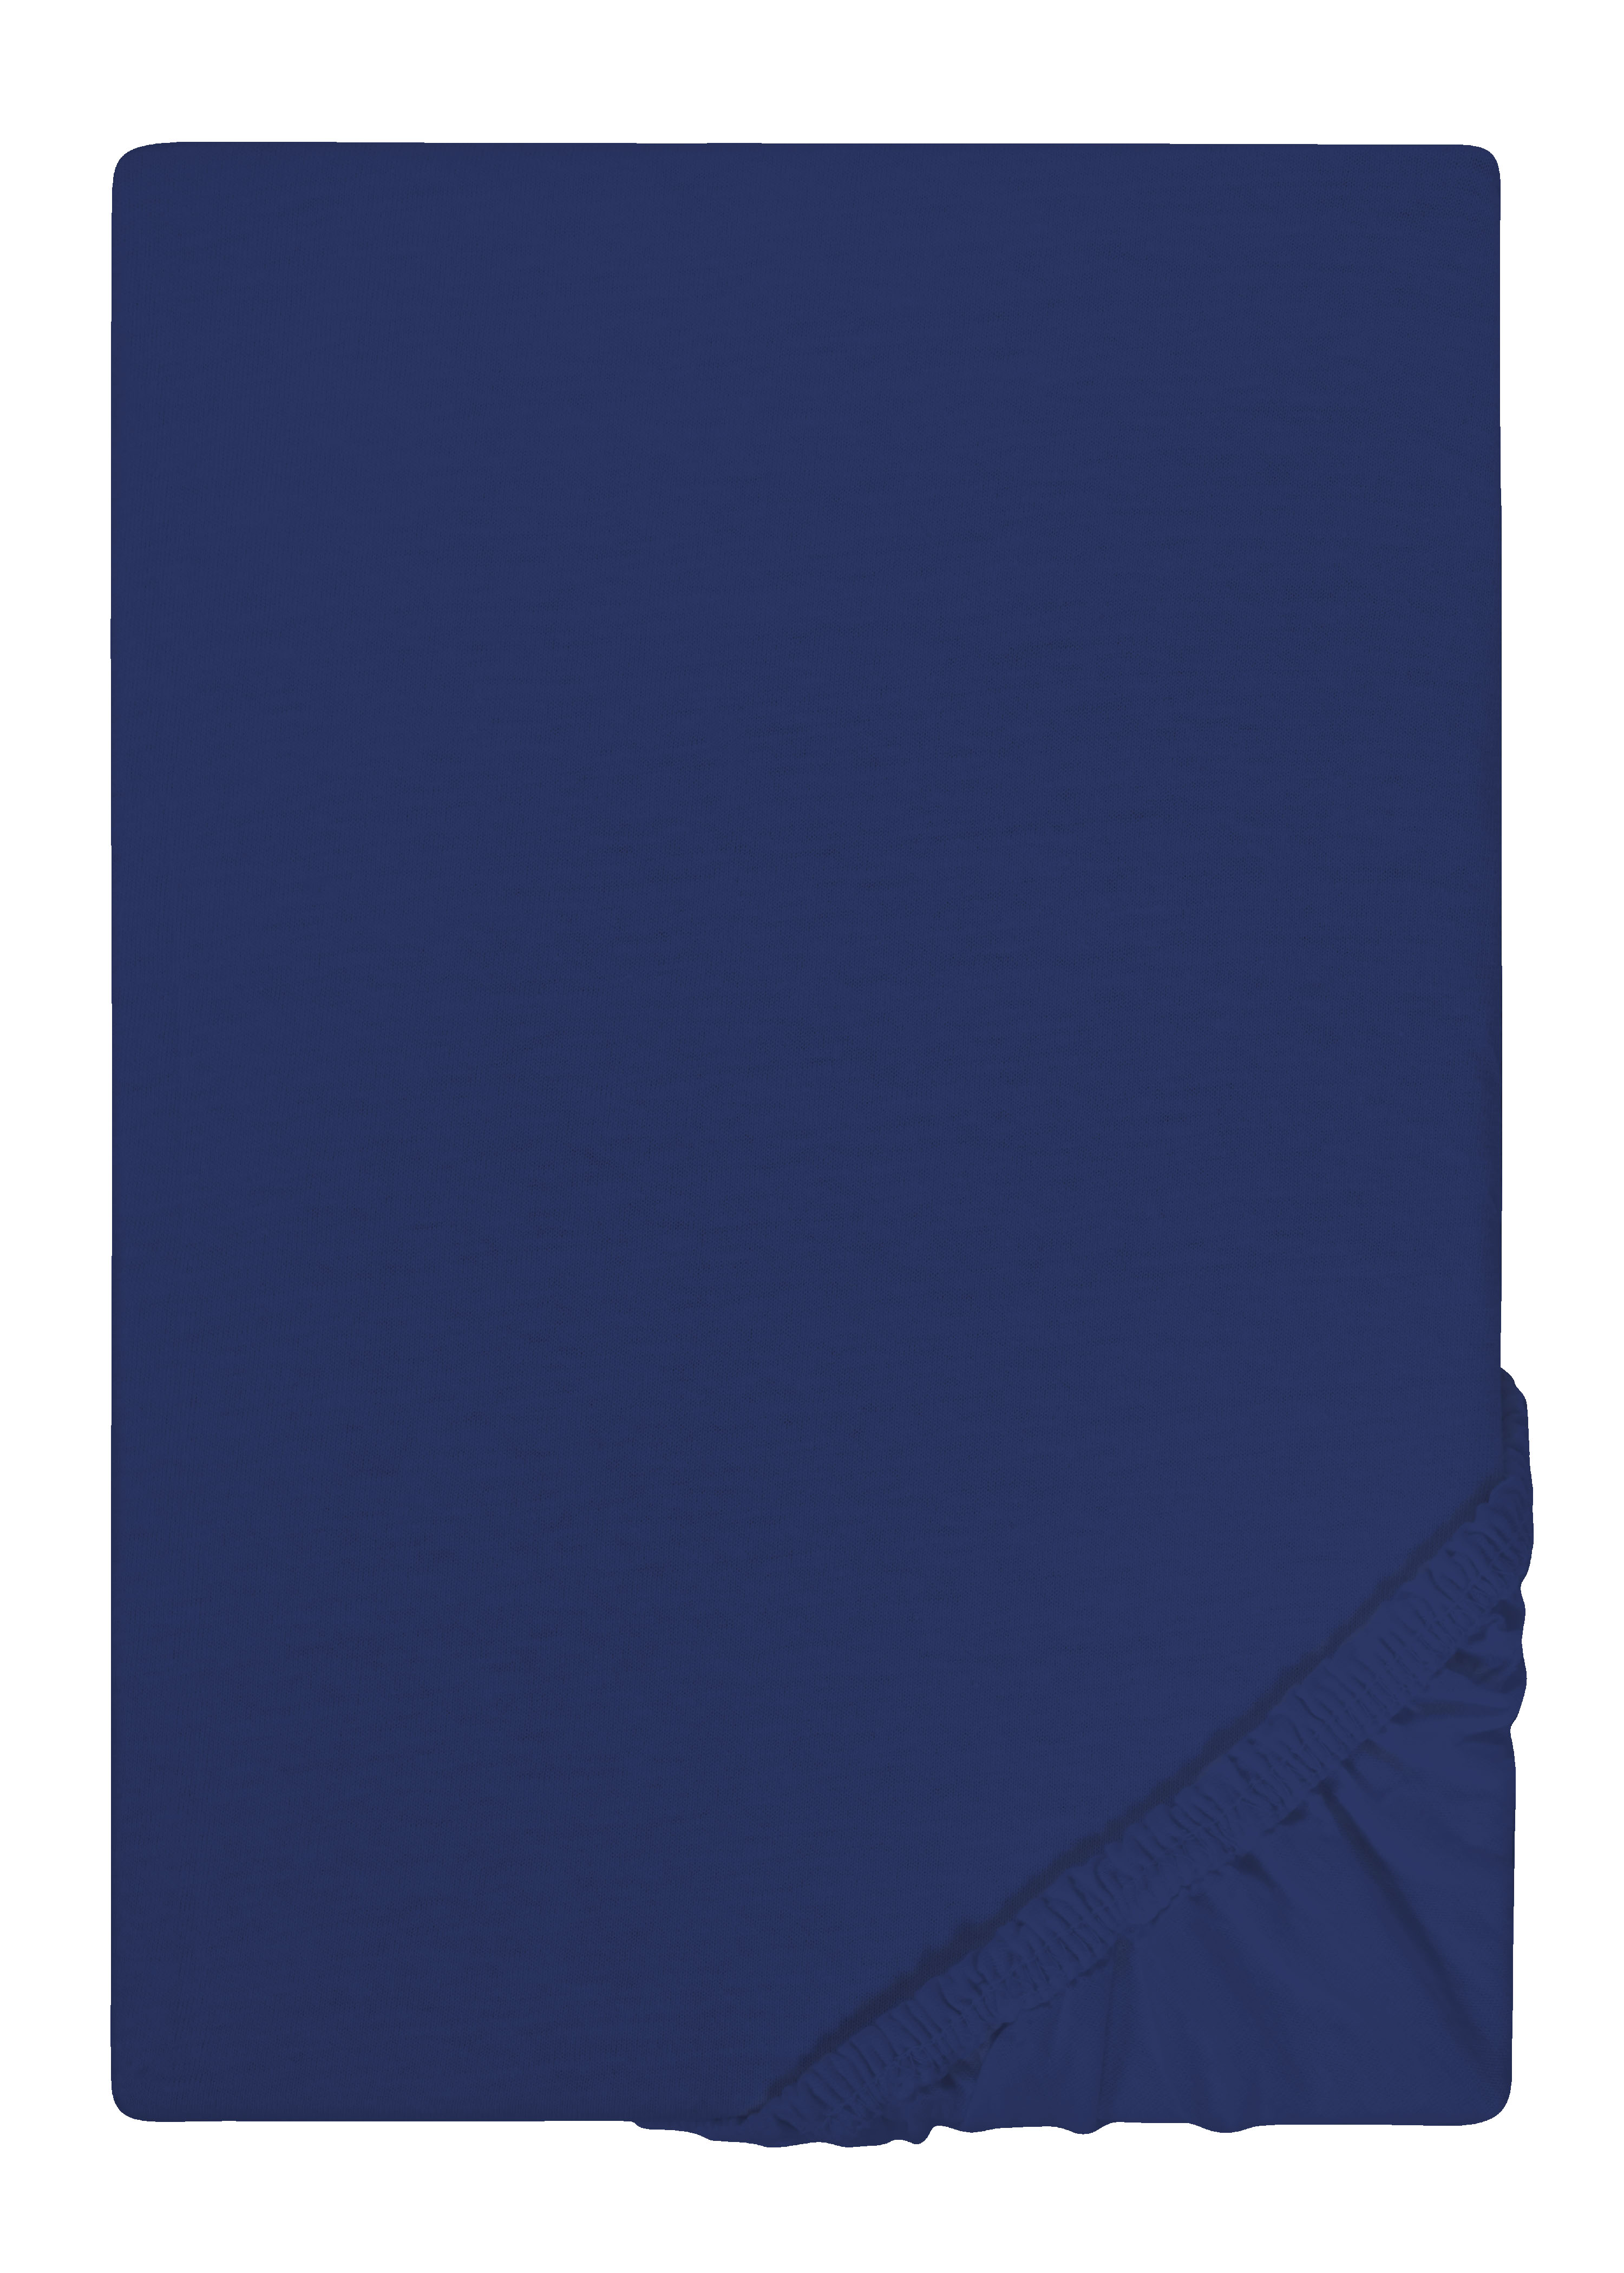 Begrenzter Lagerbestand verfügbar Castell 0077113 Jersey-Stretch-Spannbetttuch 120/200 | cm, biberna blau